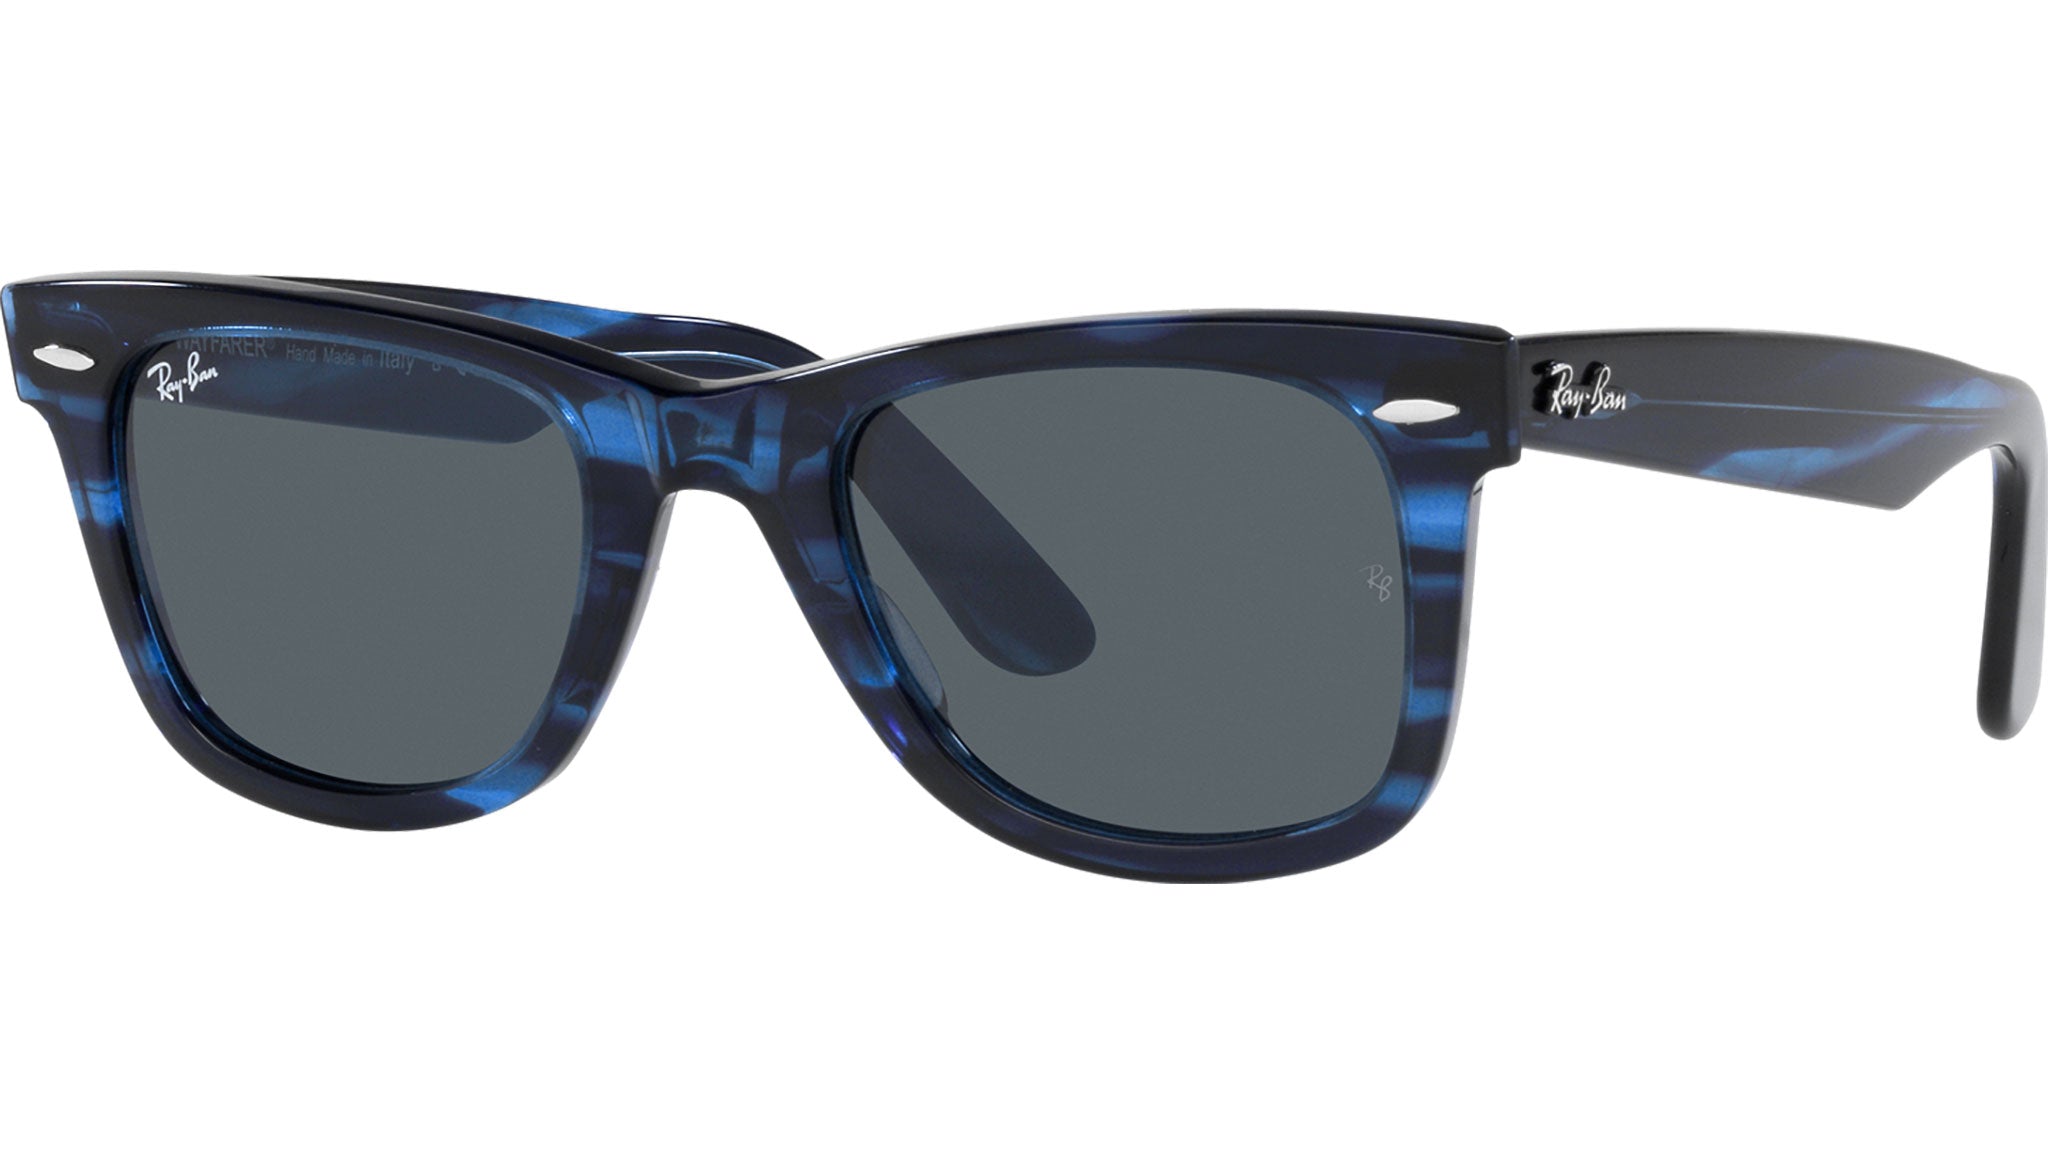 Wayfarer Sunglasses - Buy Wayfarer Sunglasses Online Starting at Just ₹90 |  Meesho